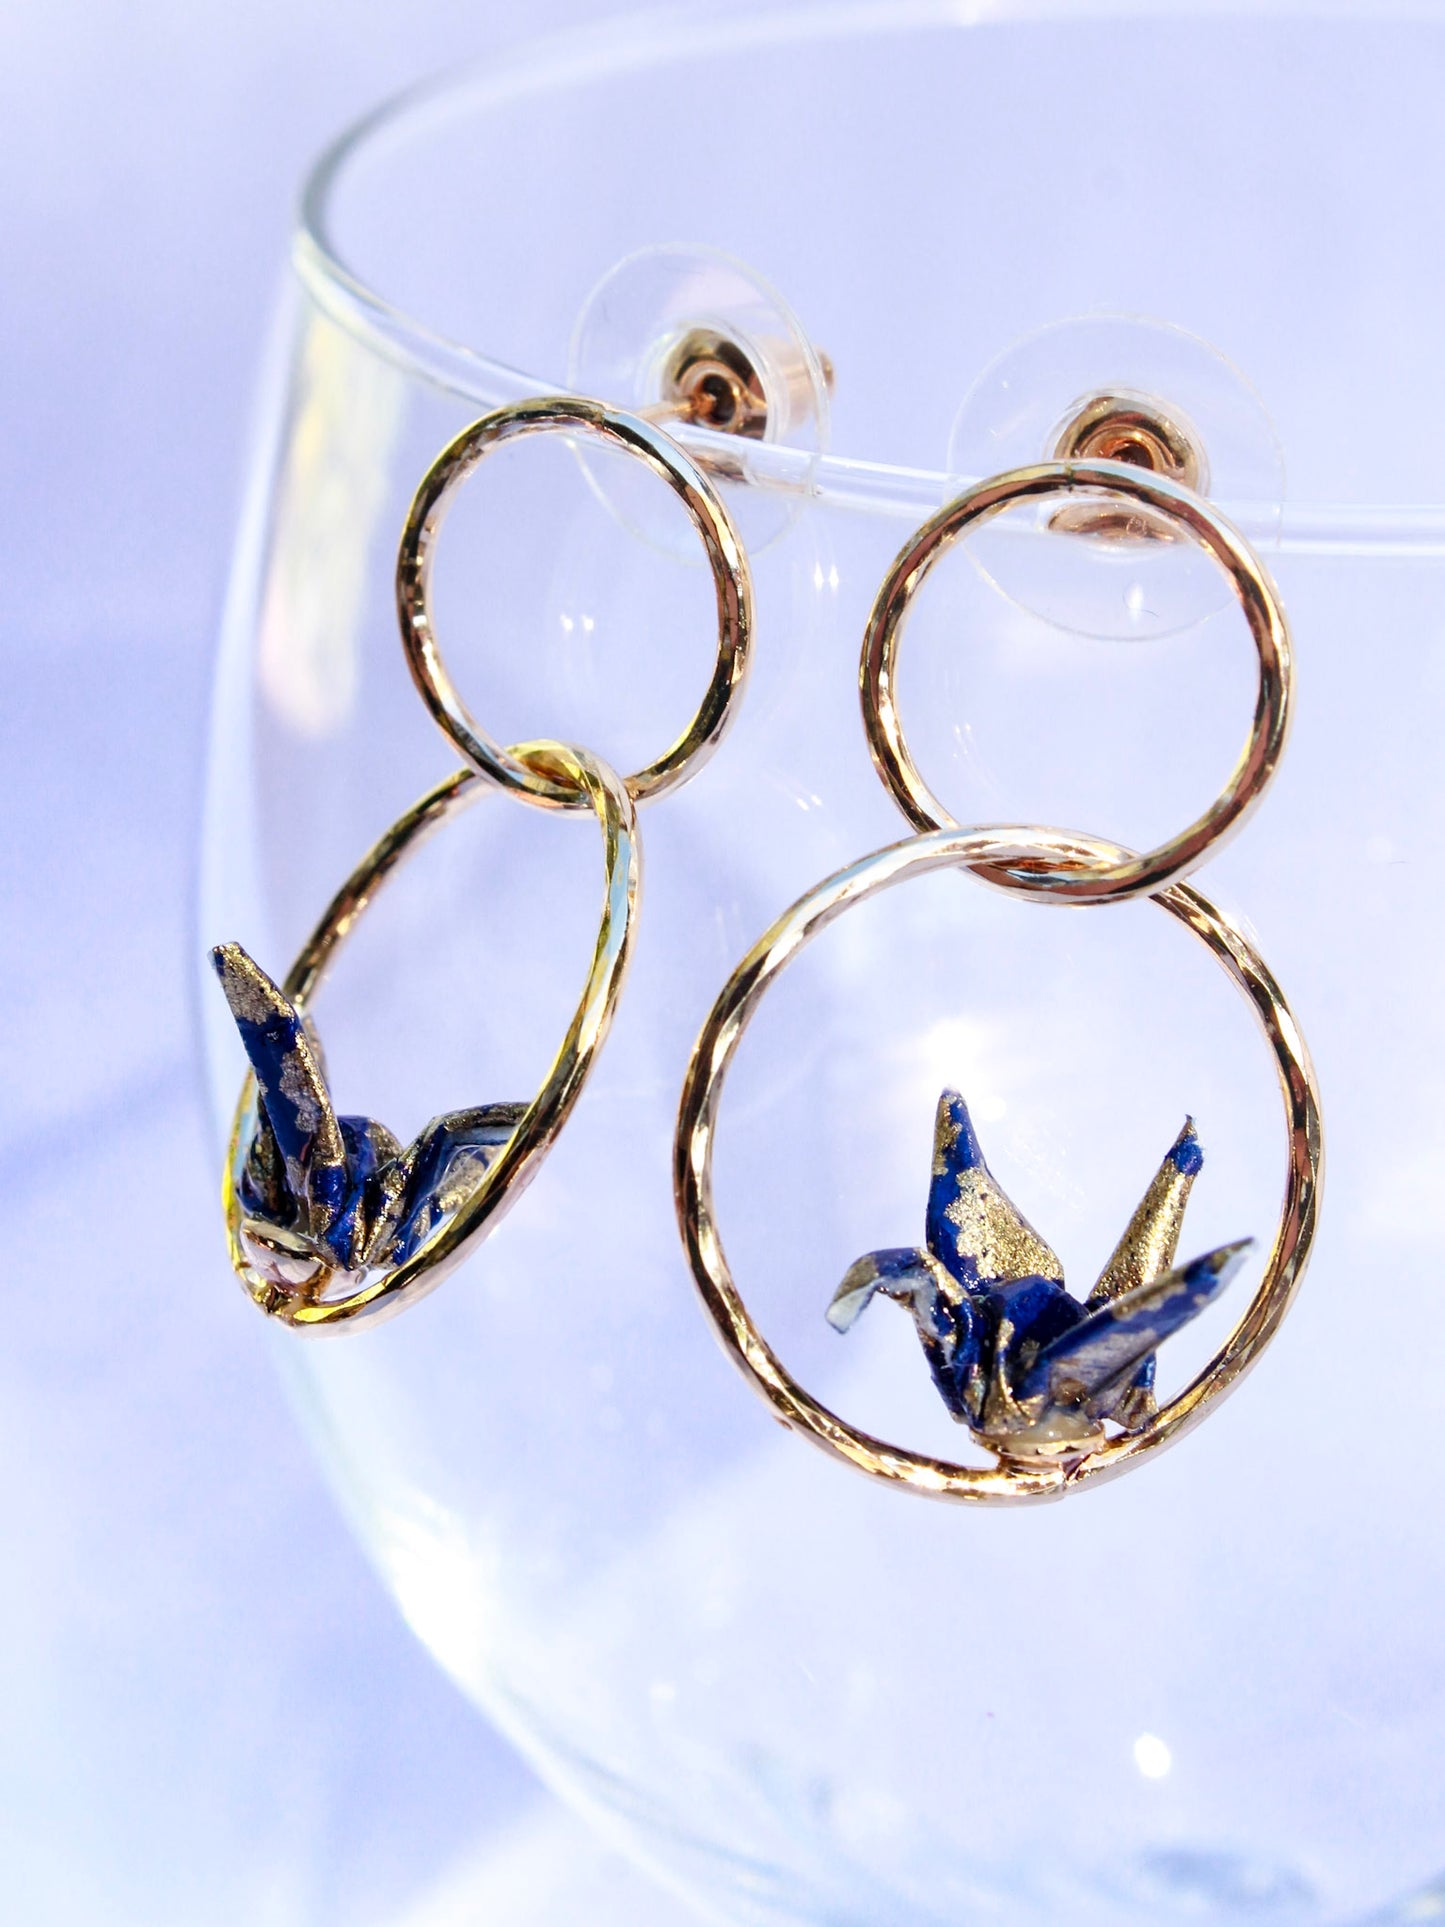 Origami Earrings - Tiny Crane Golden Wings